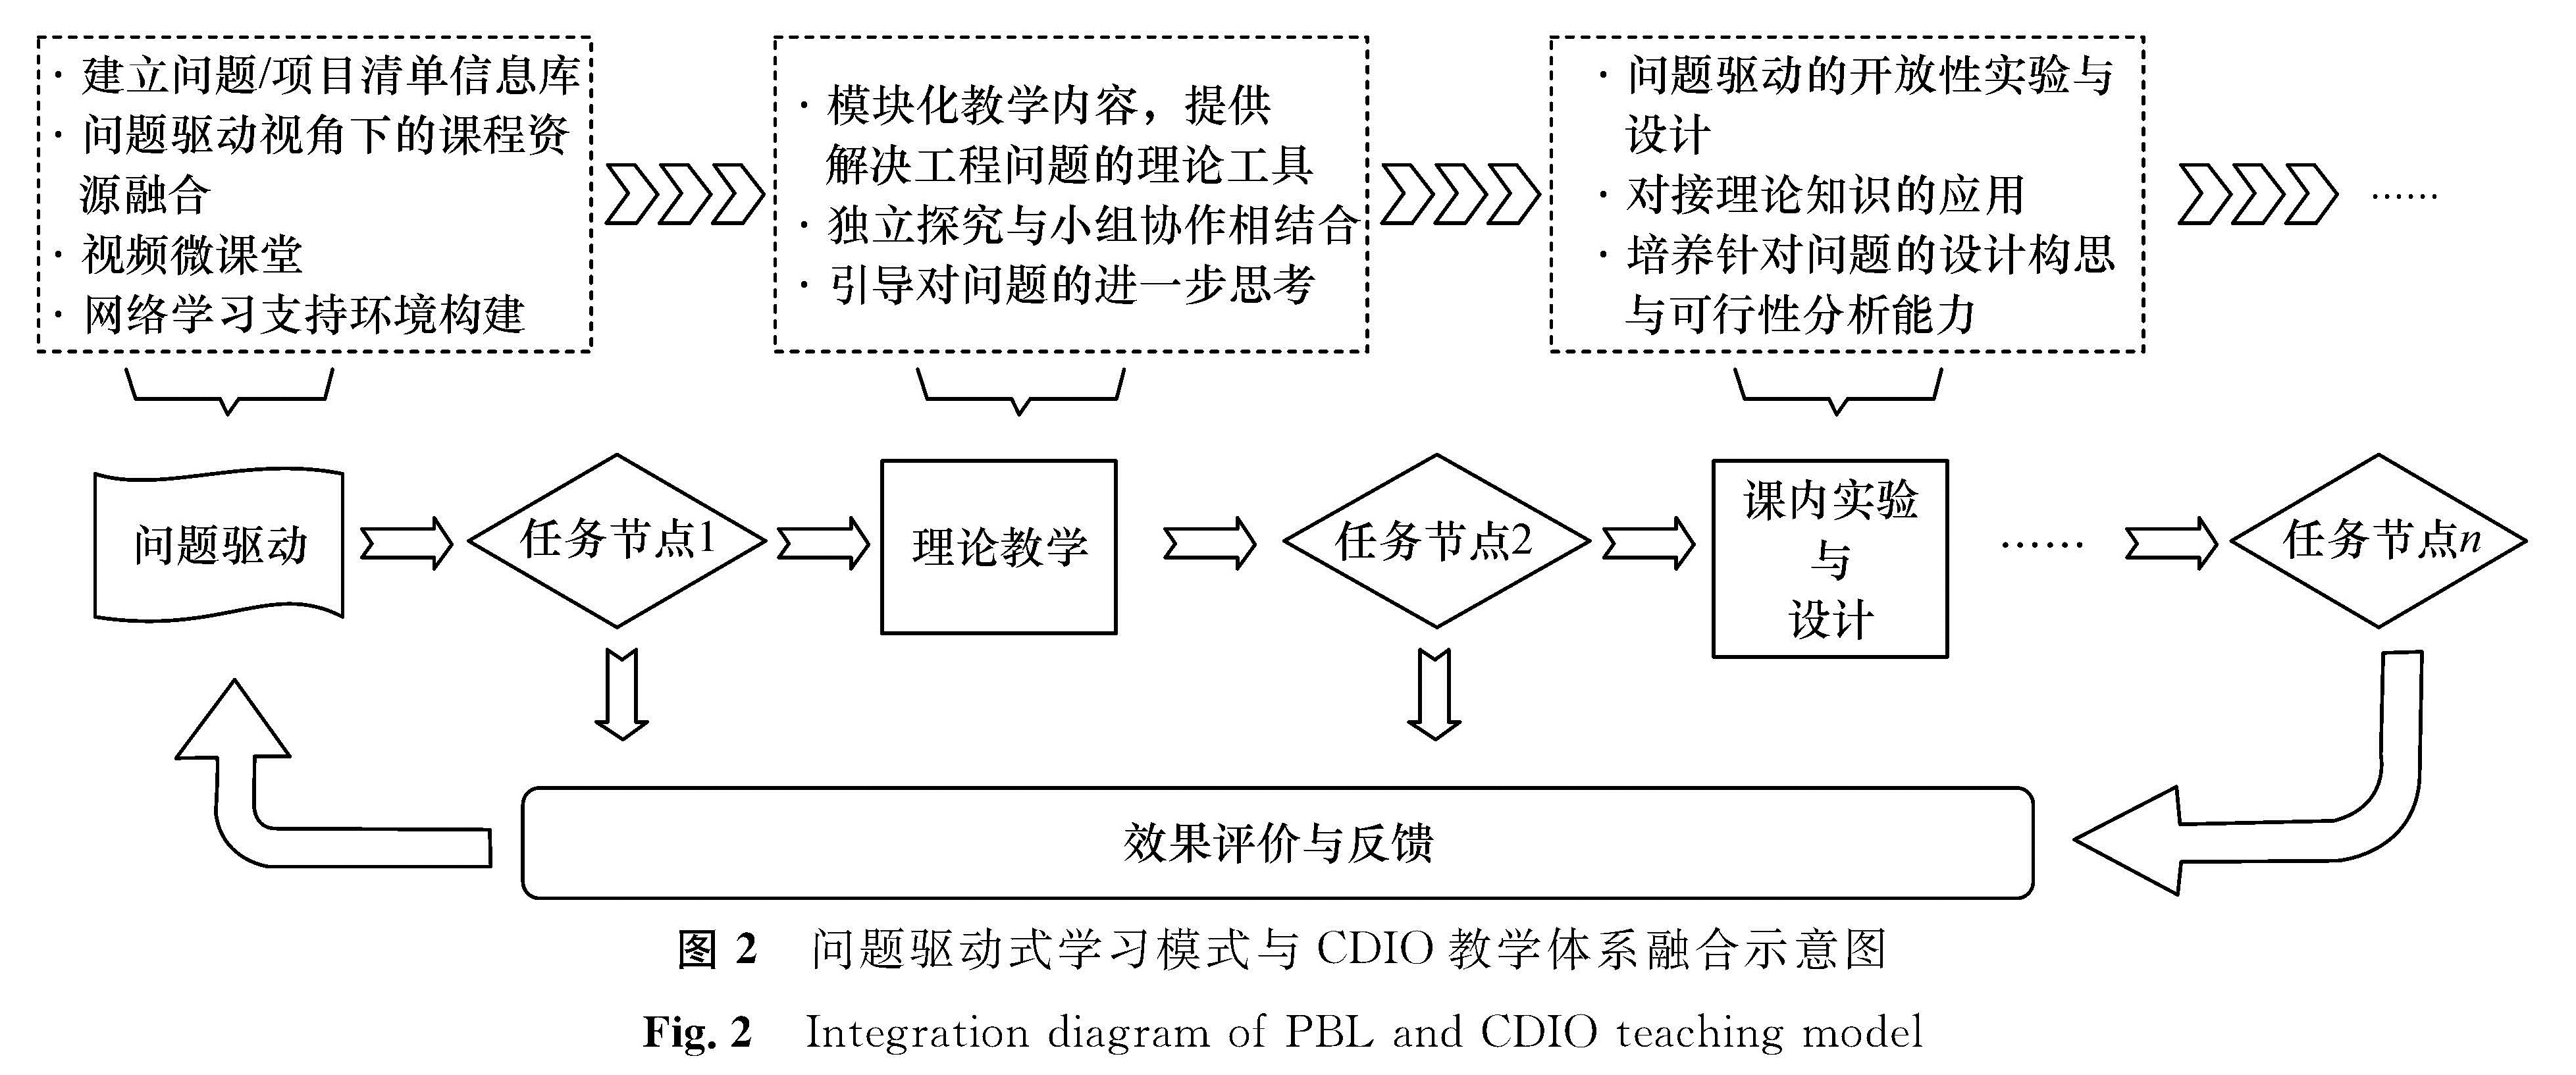 图2 问题驱动式学习模式与CDIO教学体系融合示意图<br/>Fig.2 Integration diagram of PBL and CDIO teaching model